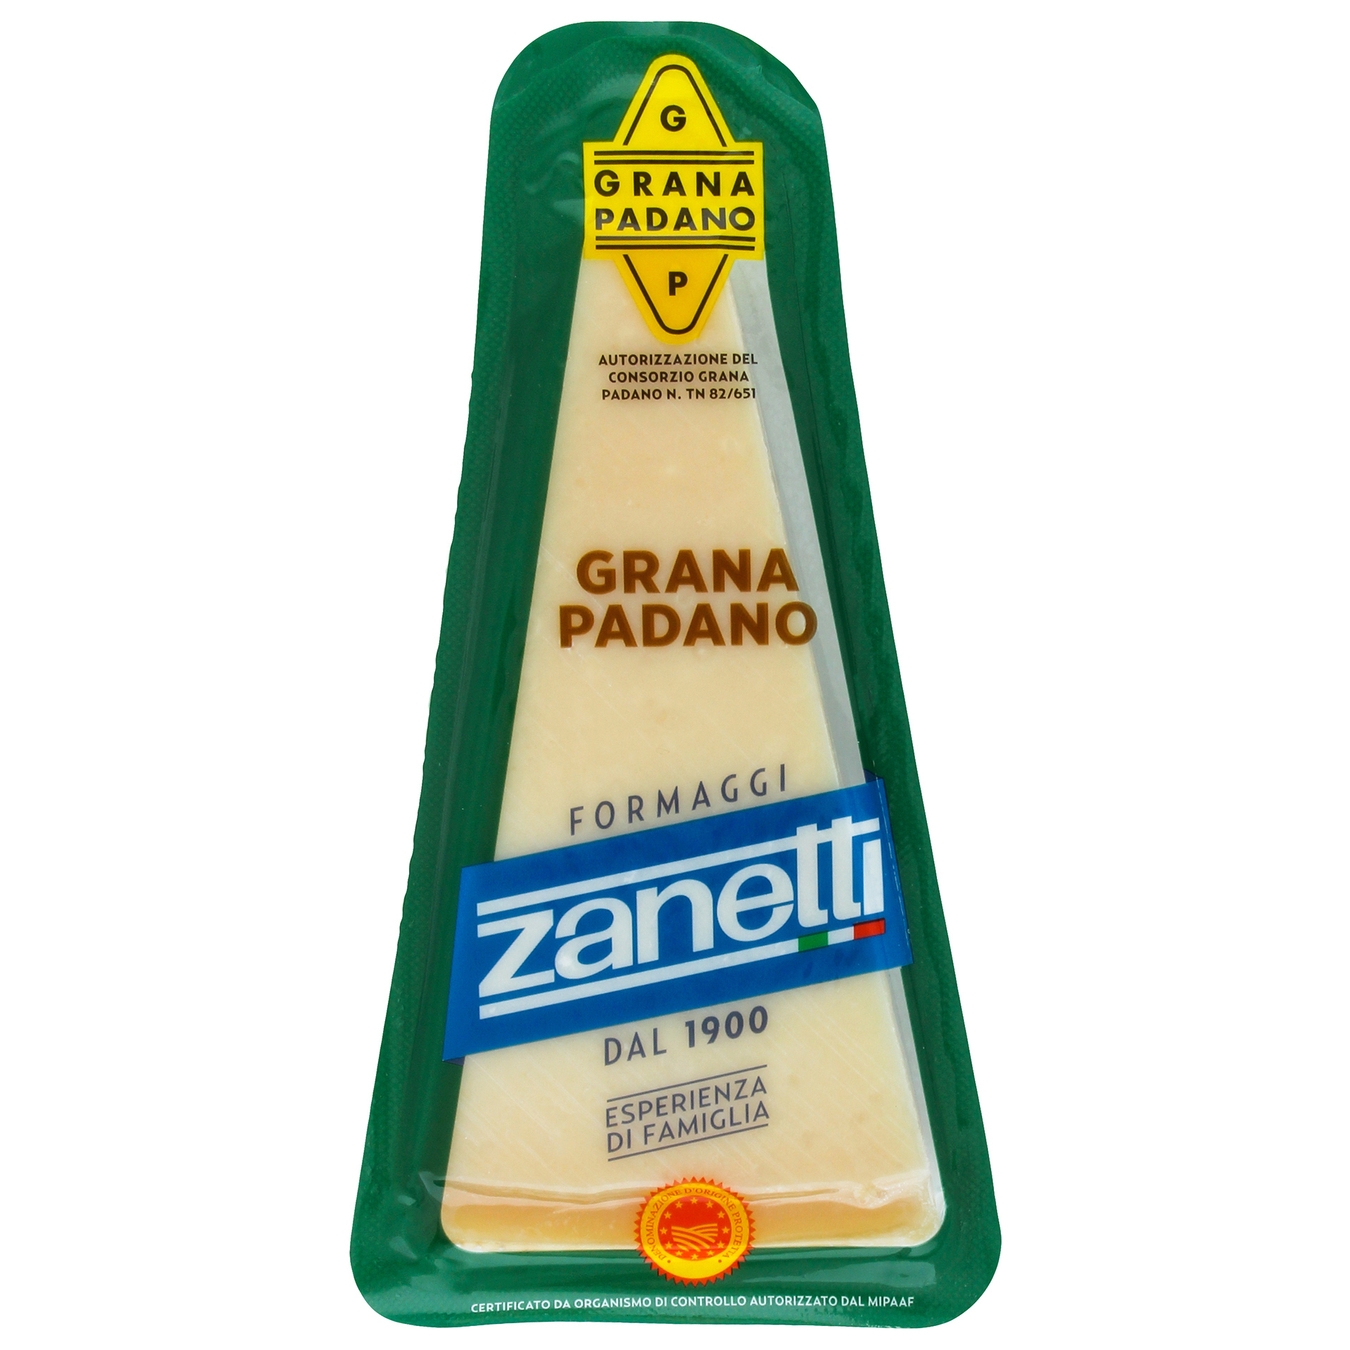 Cheese Zanetti Grano Padano 32% 200g